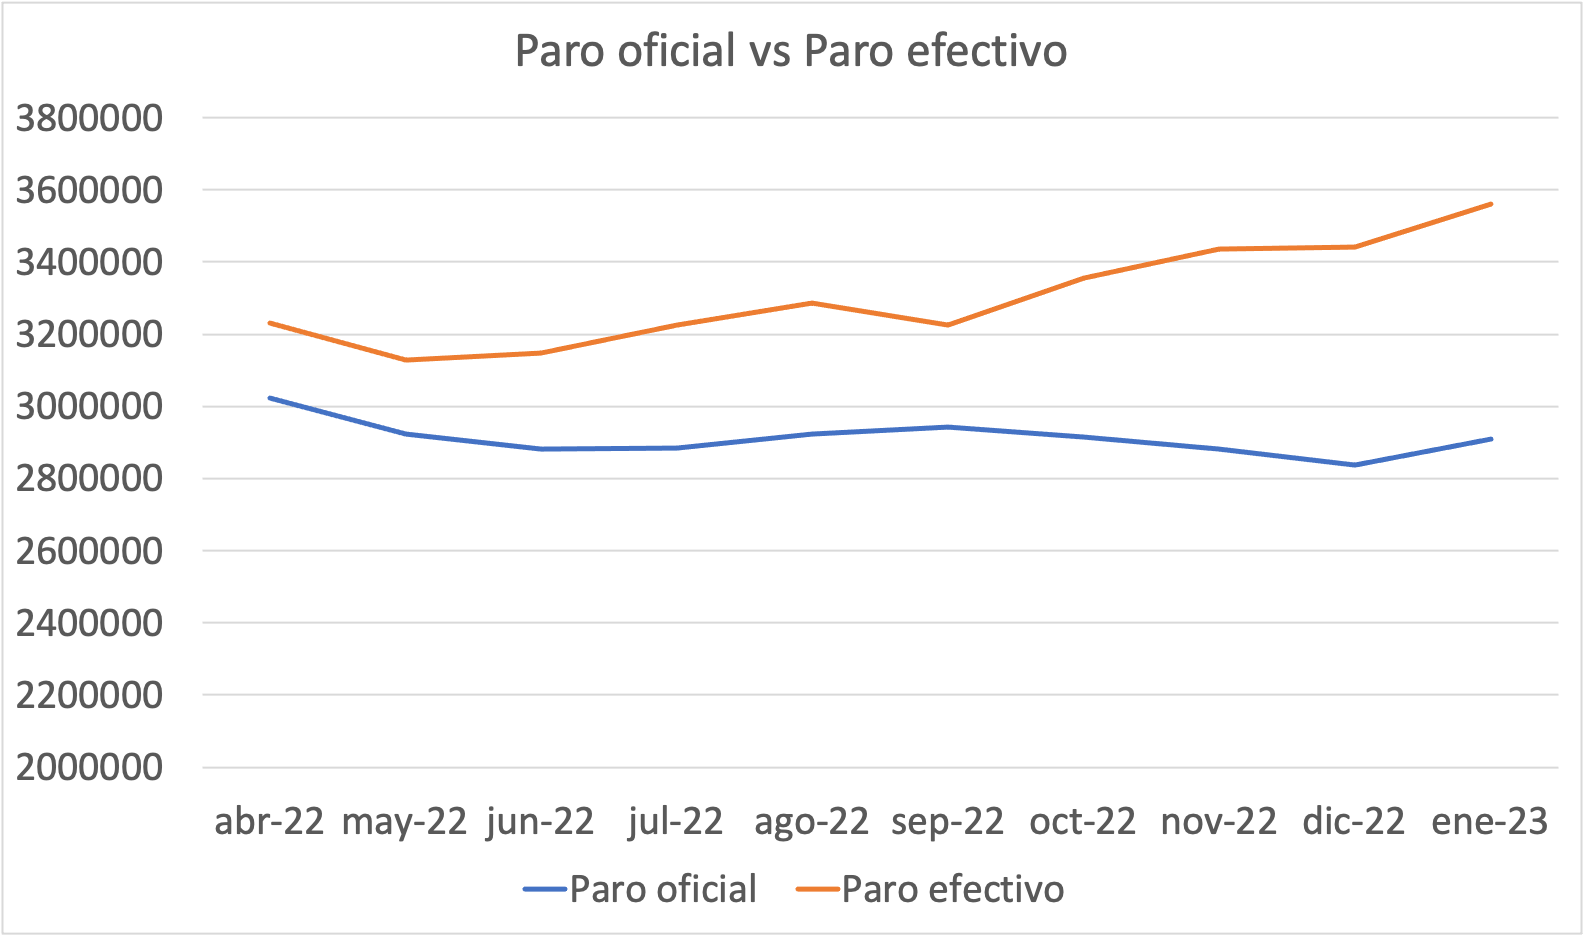 paro-oficial-vs-paro-efectivo-enero-2023.jpg